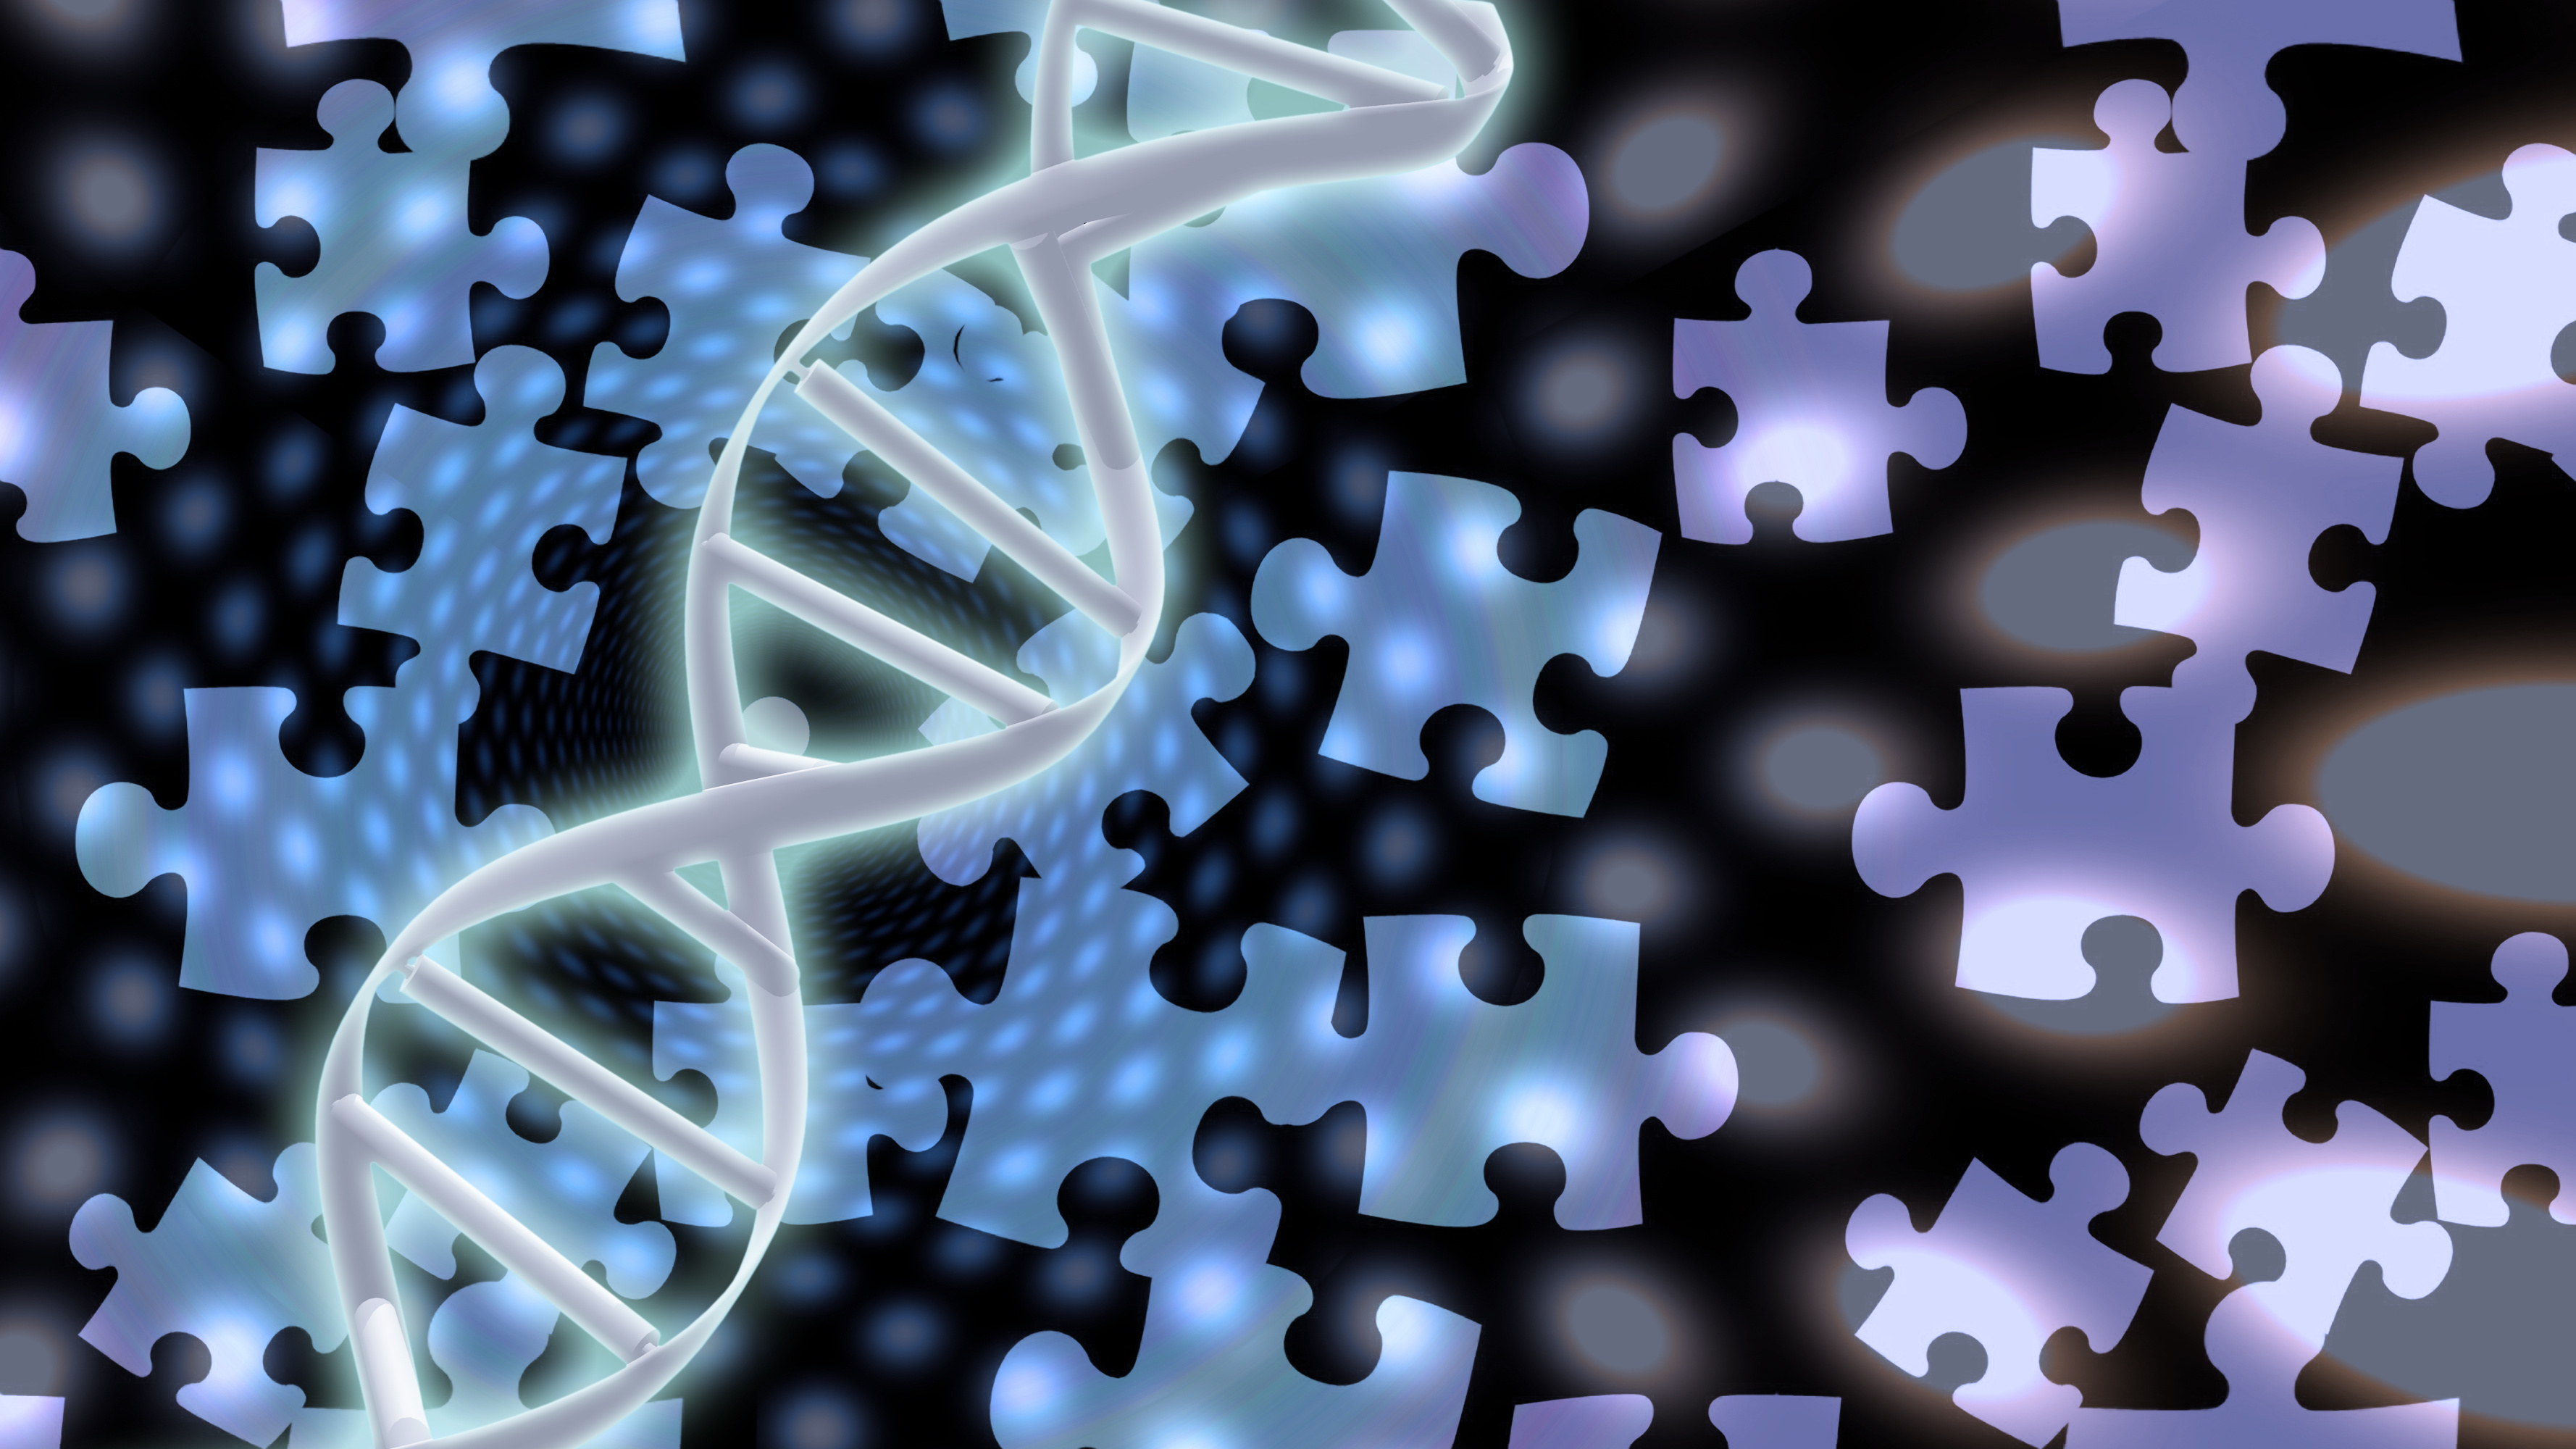 Un outil pour vos recherches ADN : What are the odds